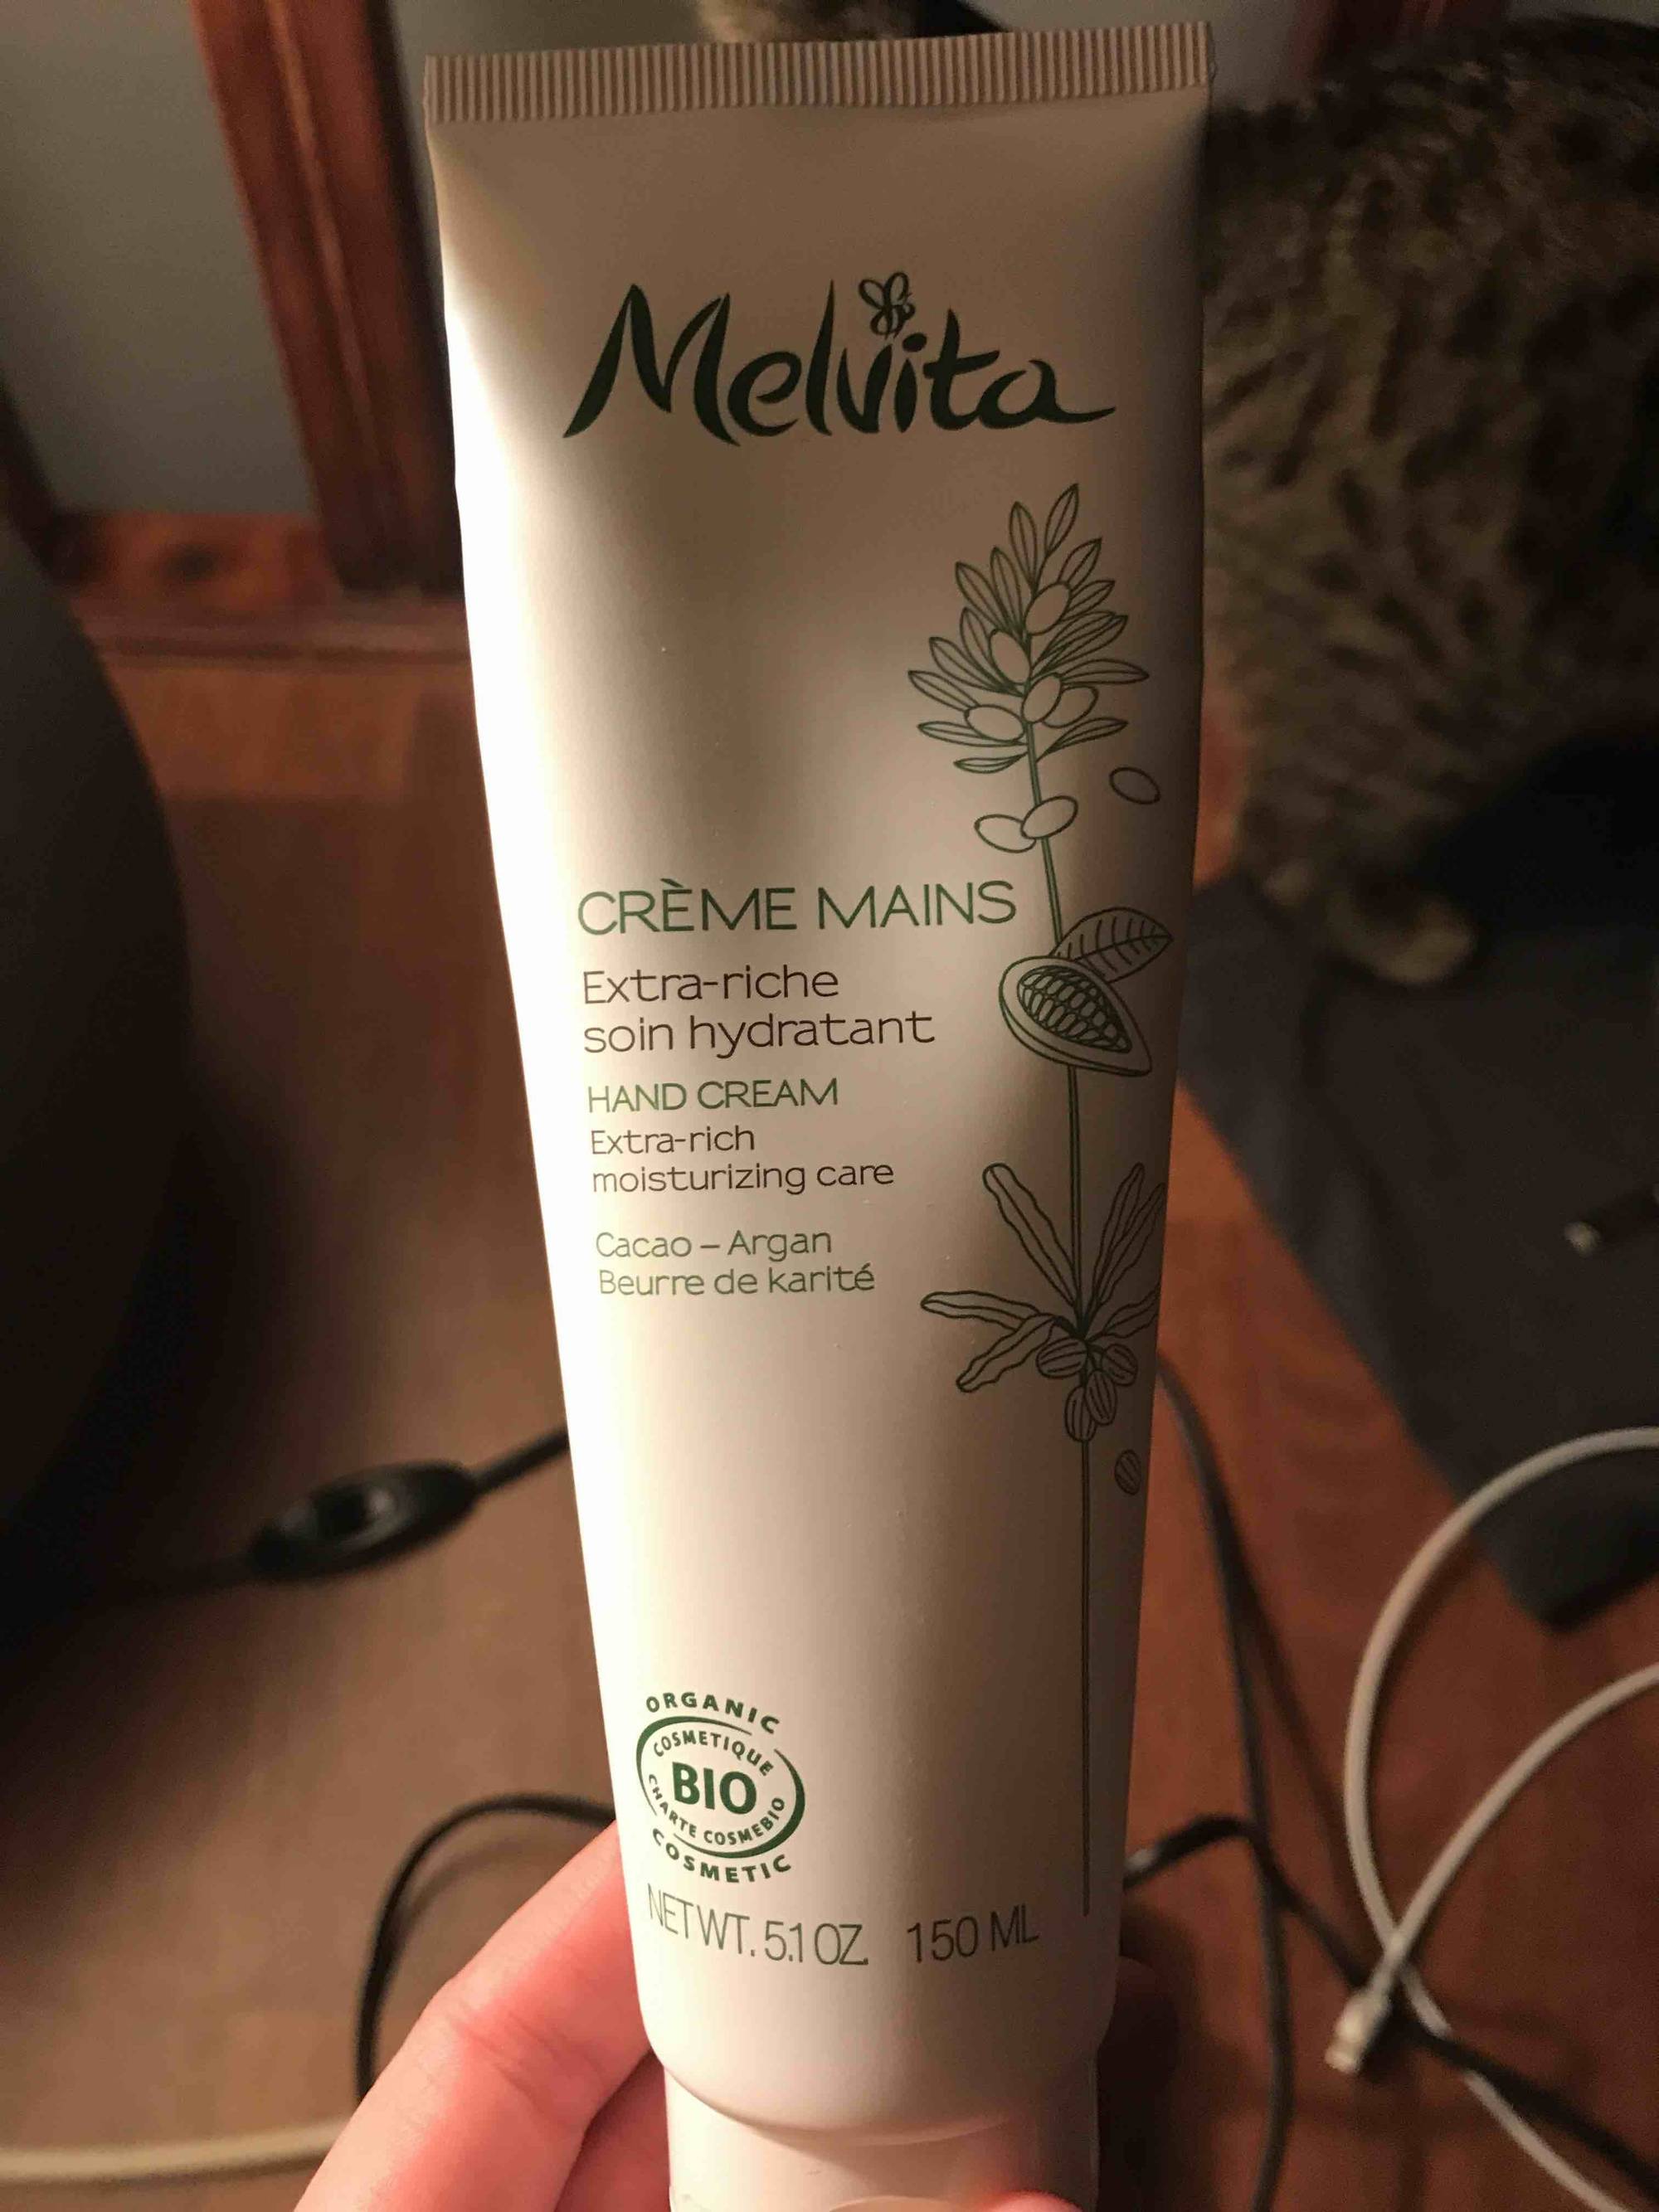 MELVITA - Crème mains extra-riche soin hydratant bio